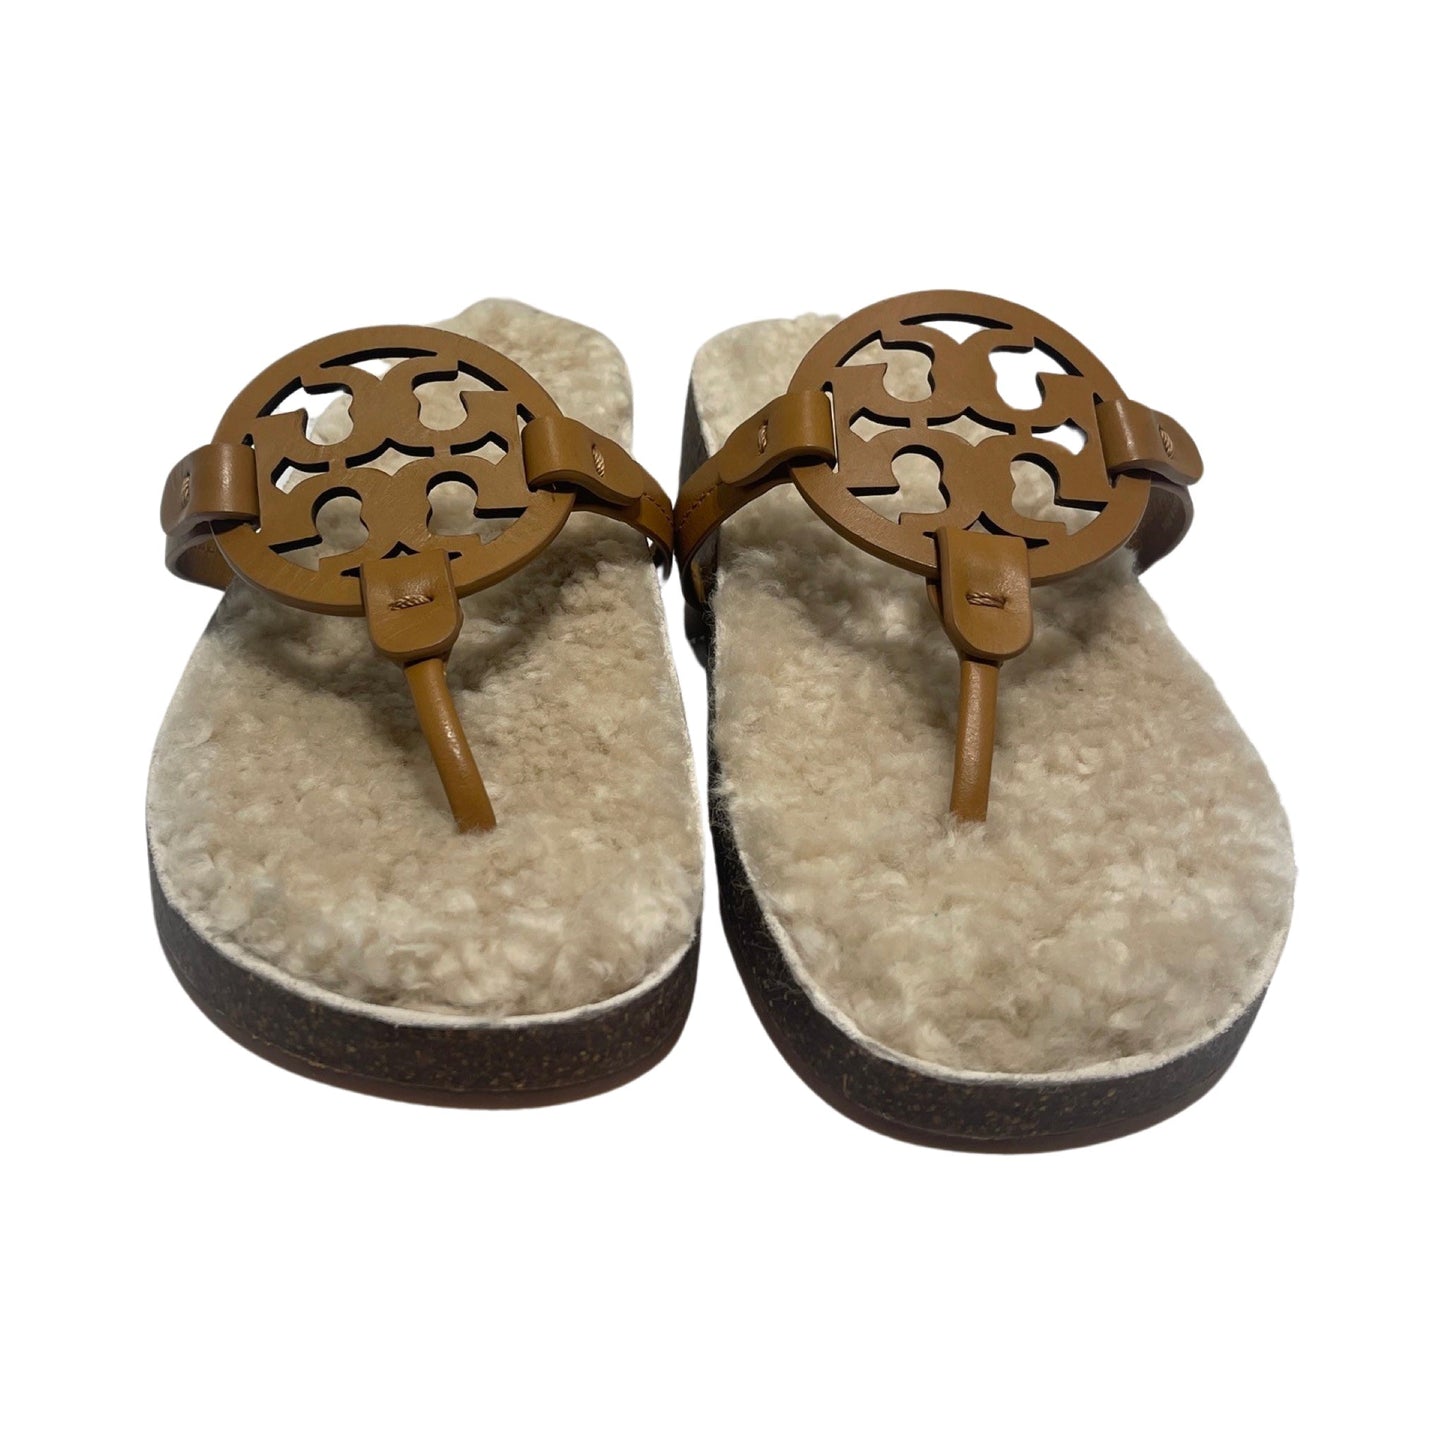 Sandals Flip Flops Designer By Tory Burch  Size: 9